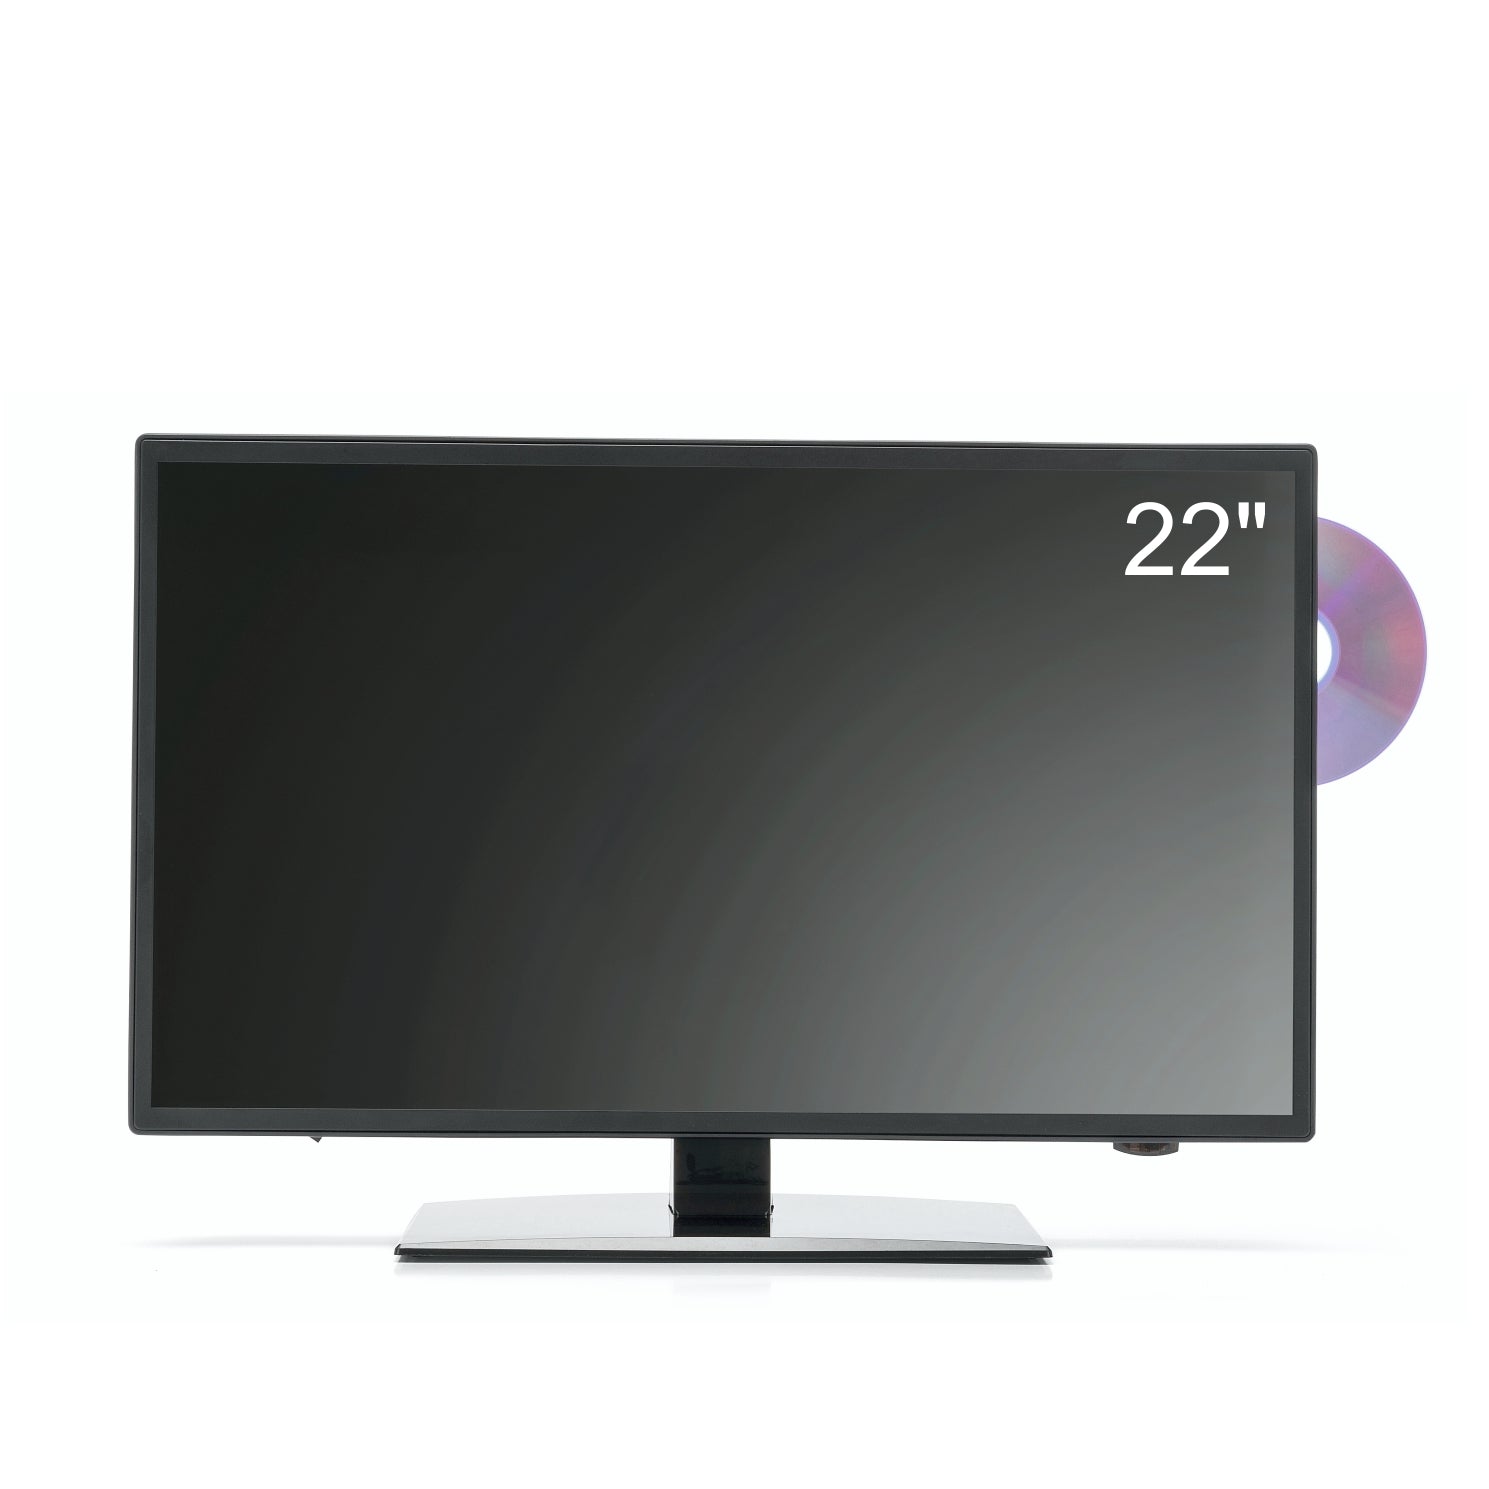 TV220+ TV con DVD 22’’ ULTRA SLIM